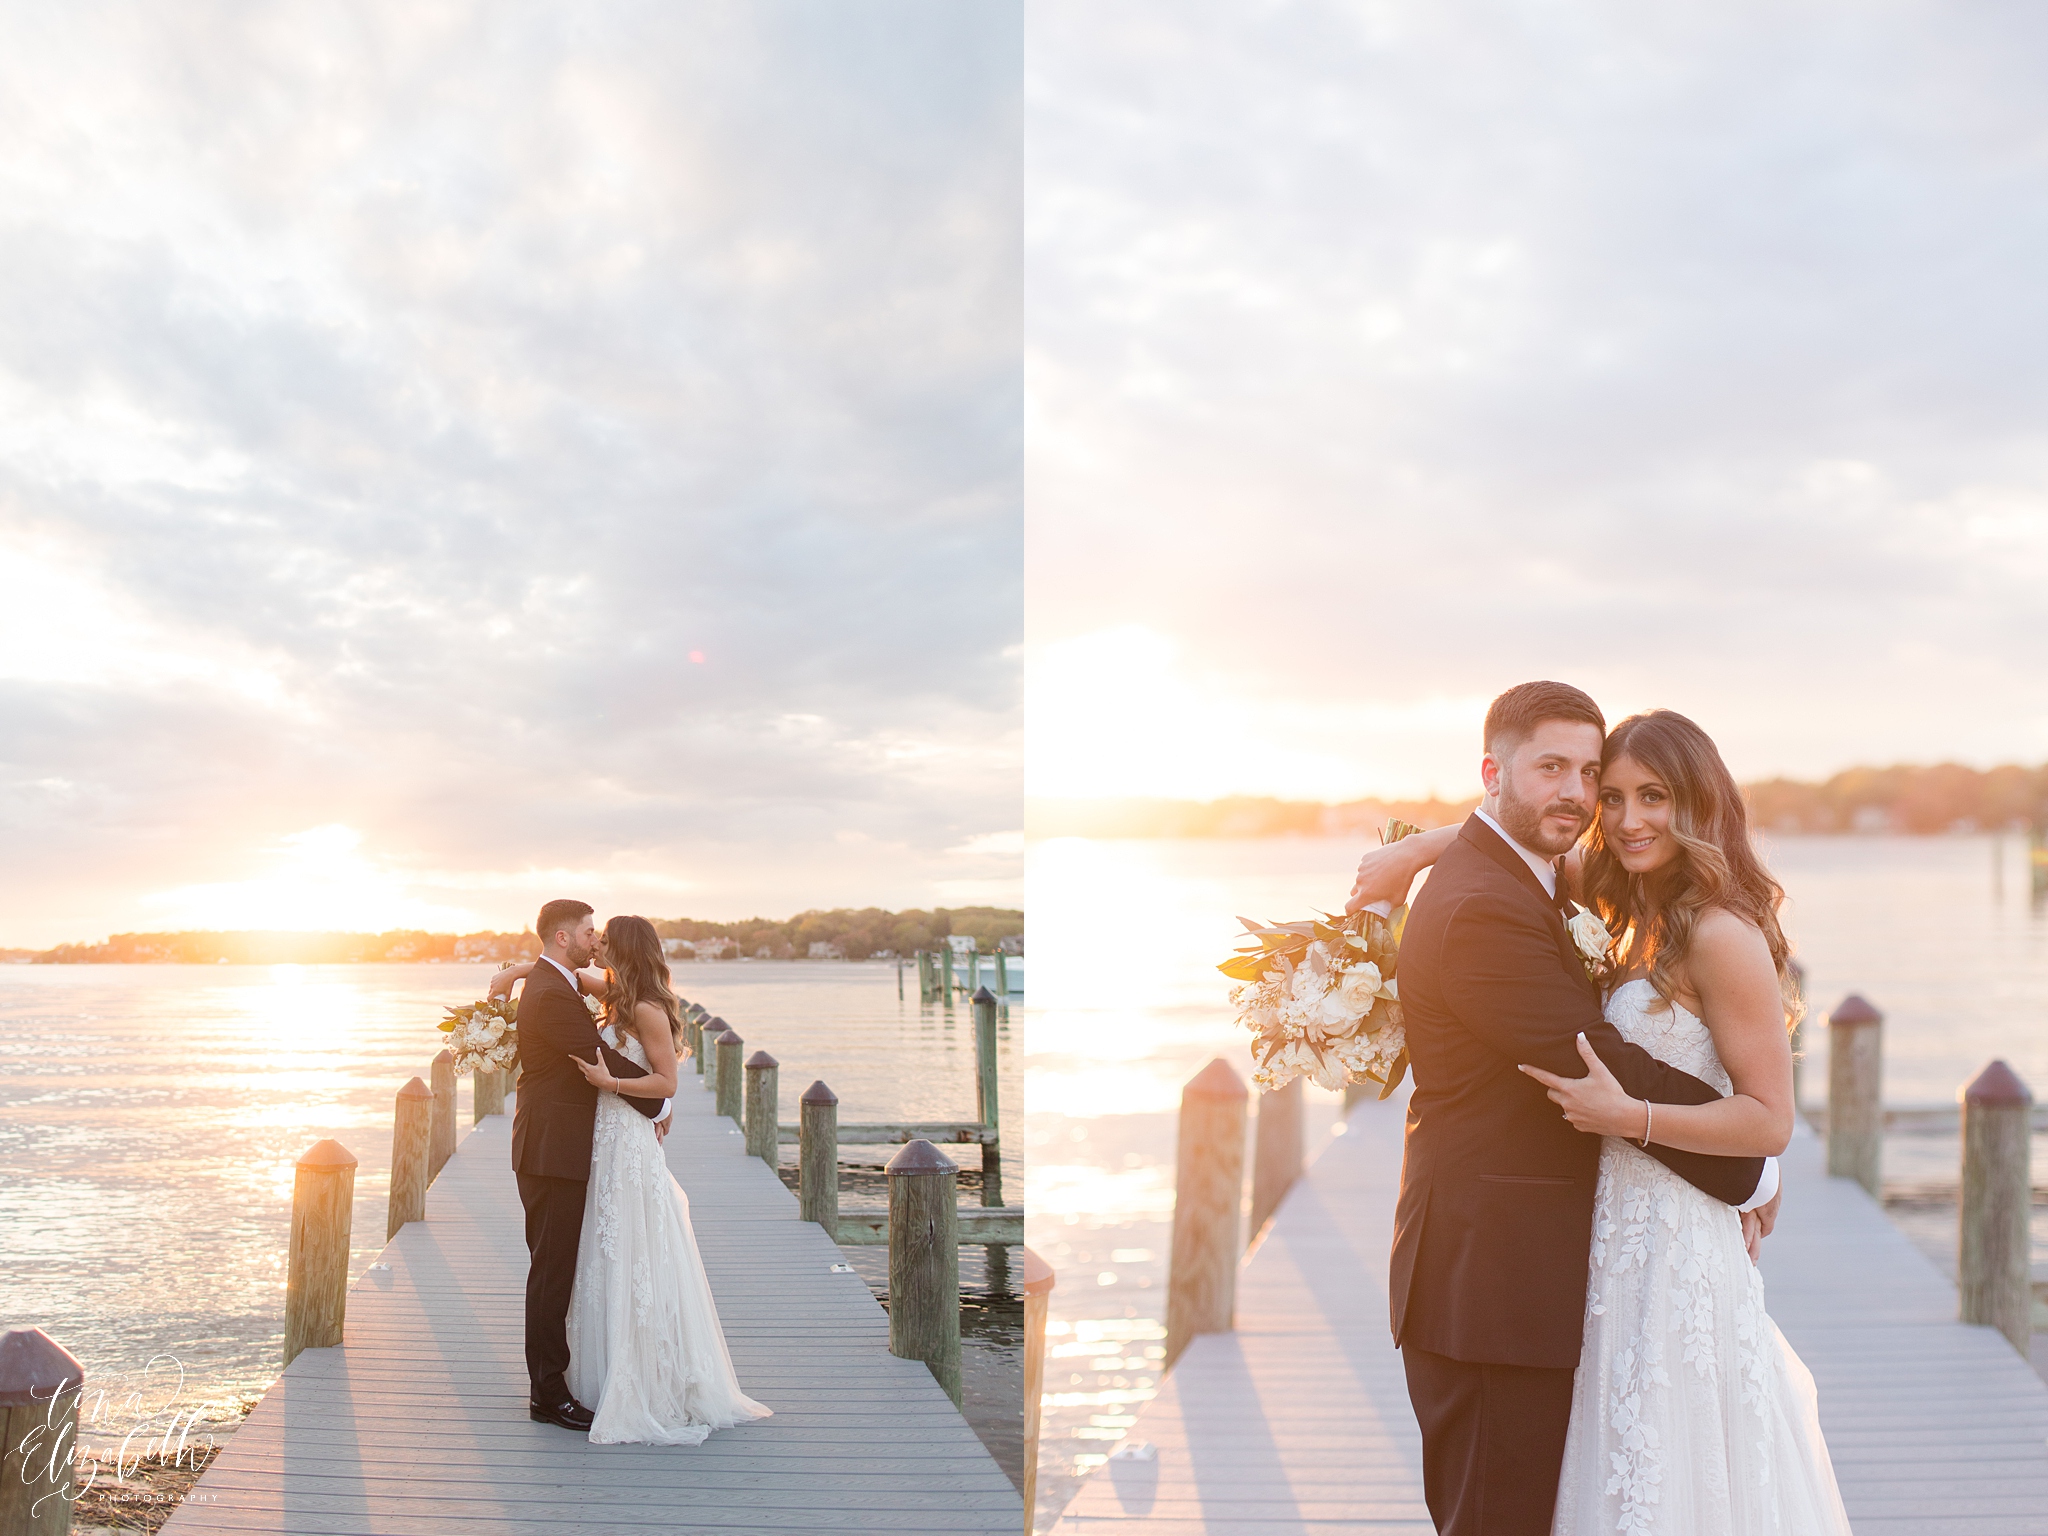 Clarks Landing Yacht Club Wedding Photos - Tina Elizabeth Photography